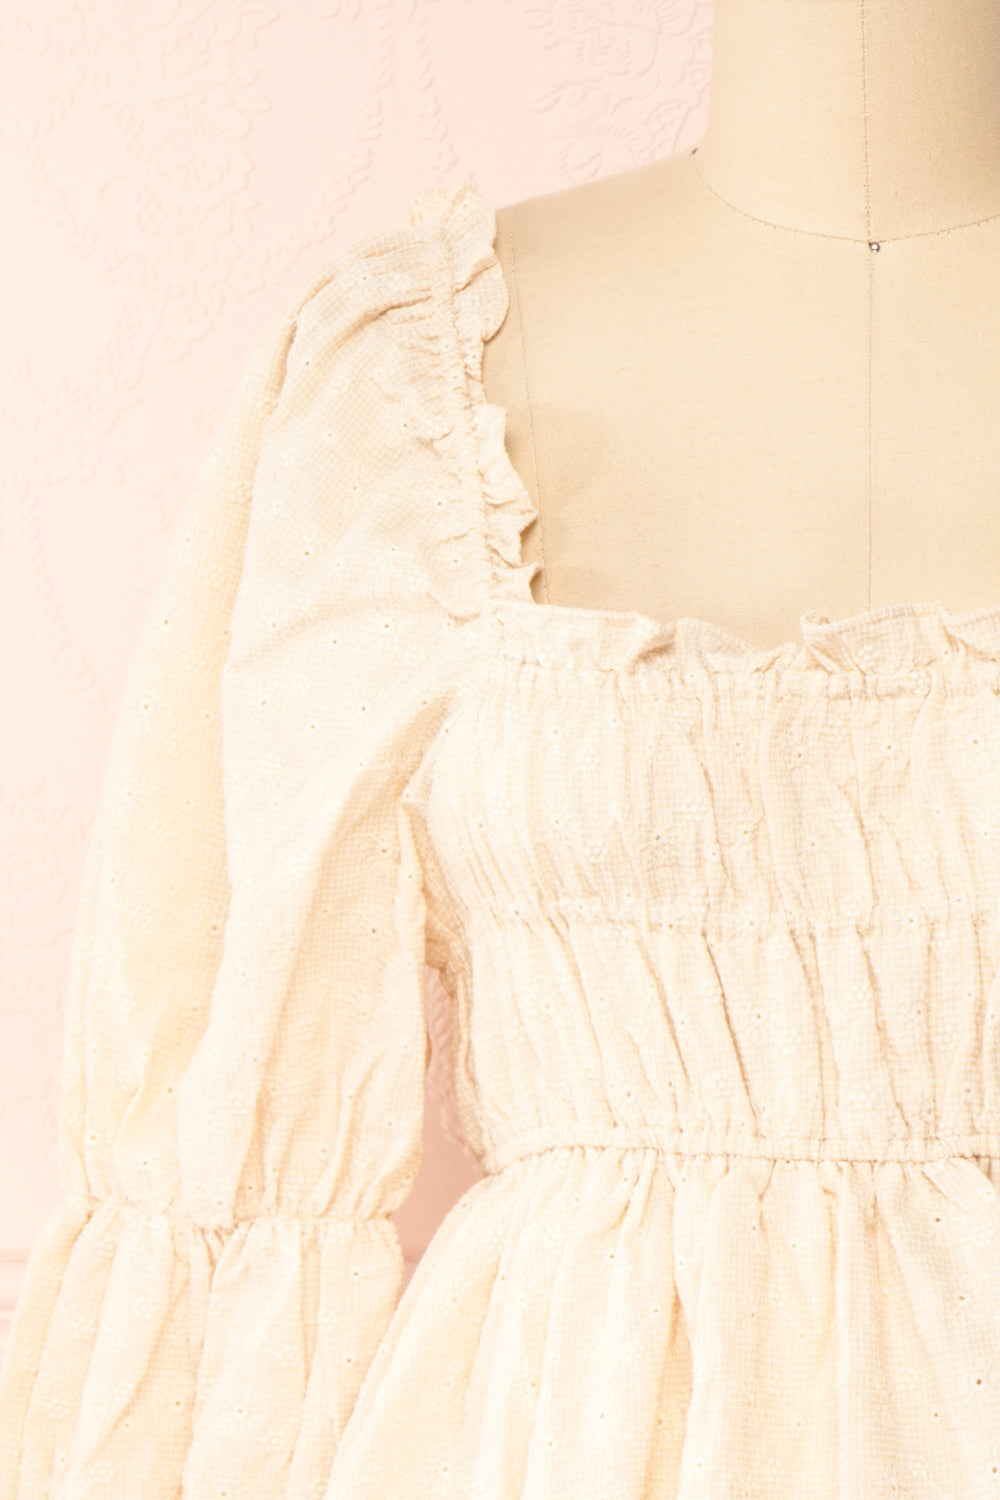 Nolla Babydoll Beige Gingham Dress w/ Flower Detailing | Boutique 1861 front close-up